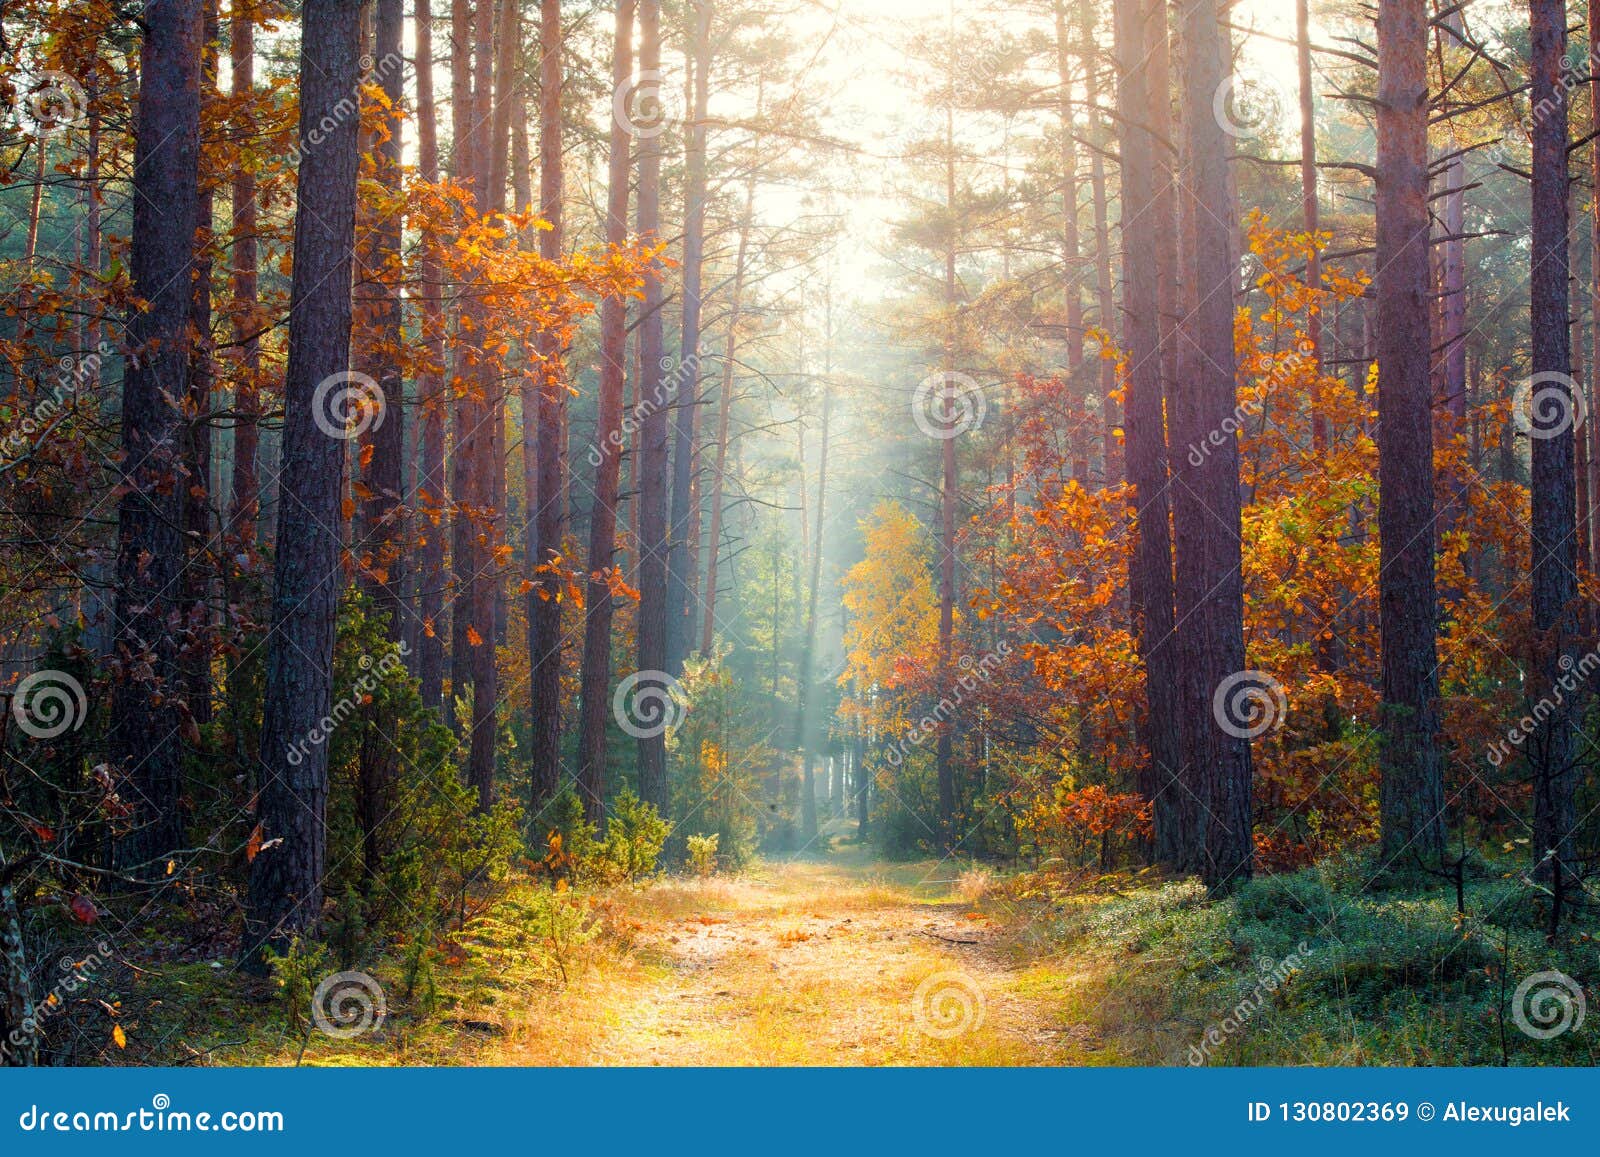 sunny autumn forest. the warm autumn sun illuminates the path in the colorful autumn forest.